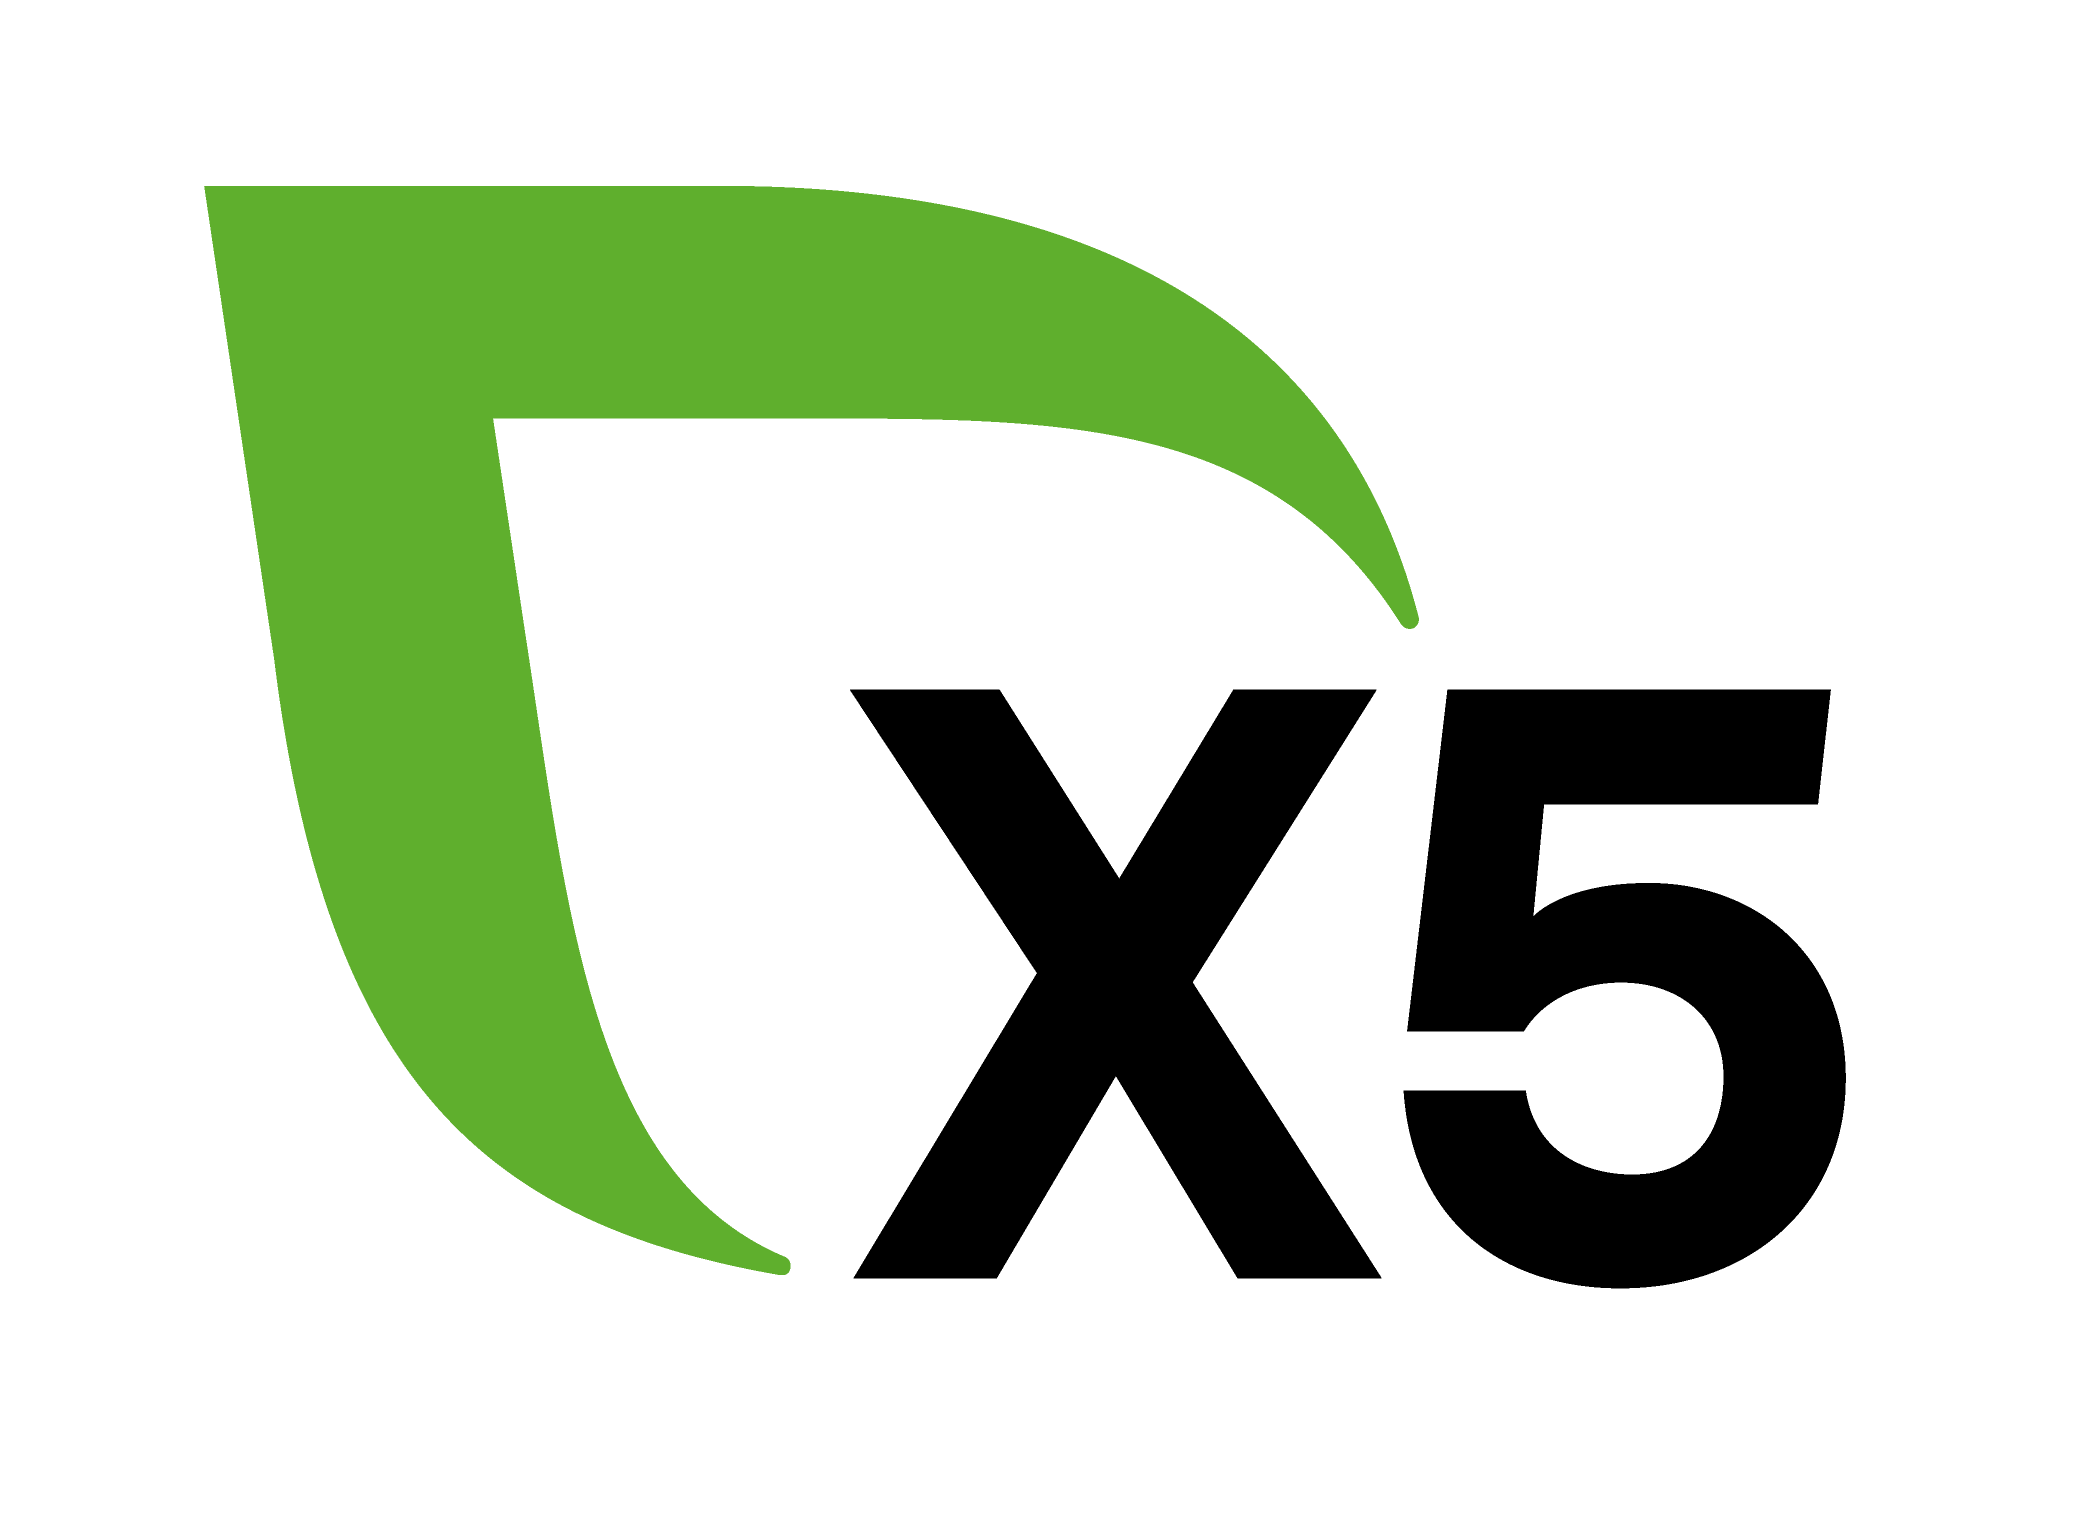 5 группа банка. Логотип x5 Ритейл групп. X5 Retail Group новый логотип. X5 Group новый логотип. Группа x5 Retail Group.